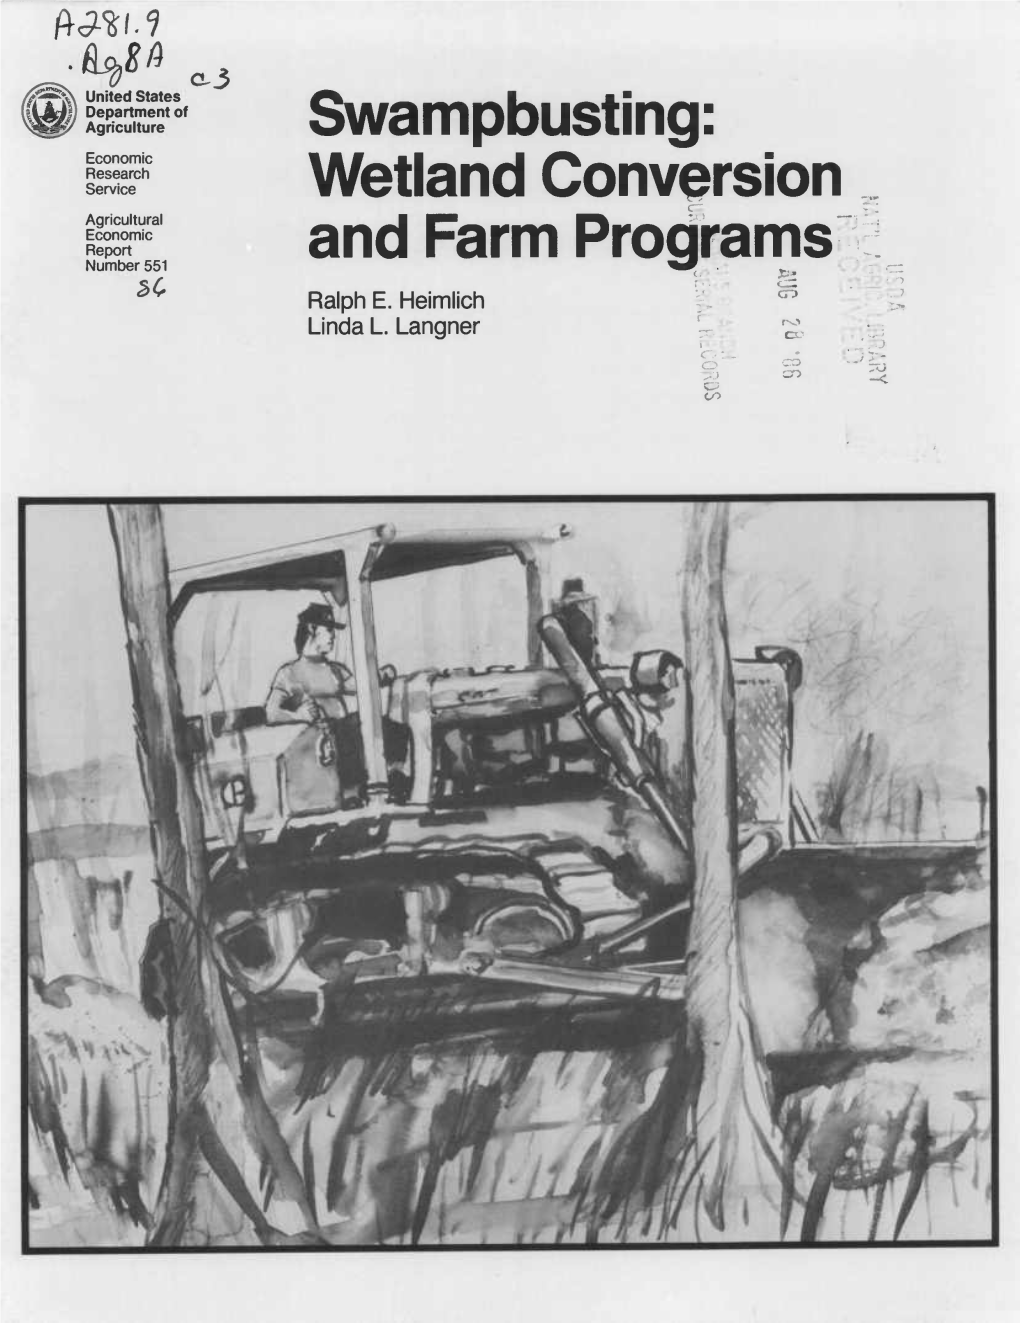 Swampbusting: Wetland Conversion and Farm Programs, by Ralph E